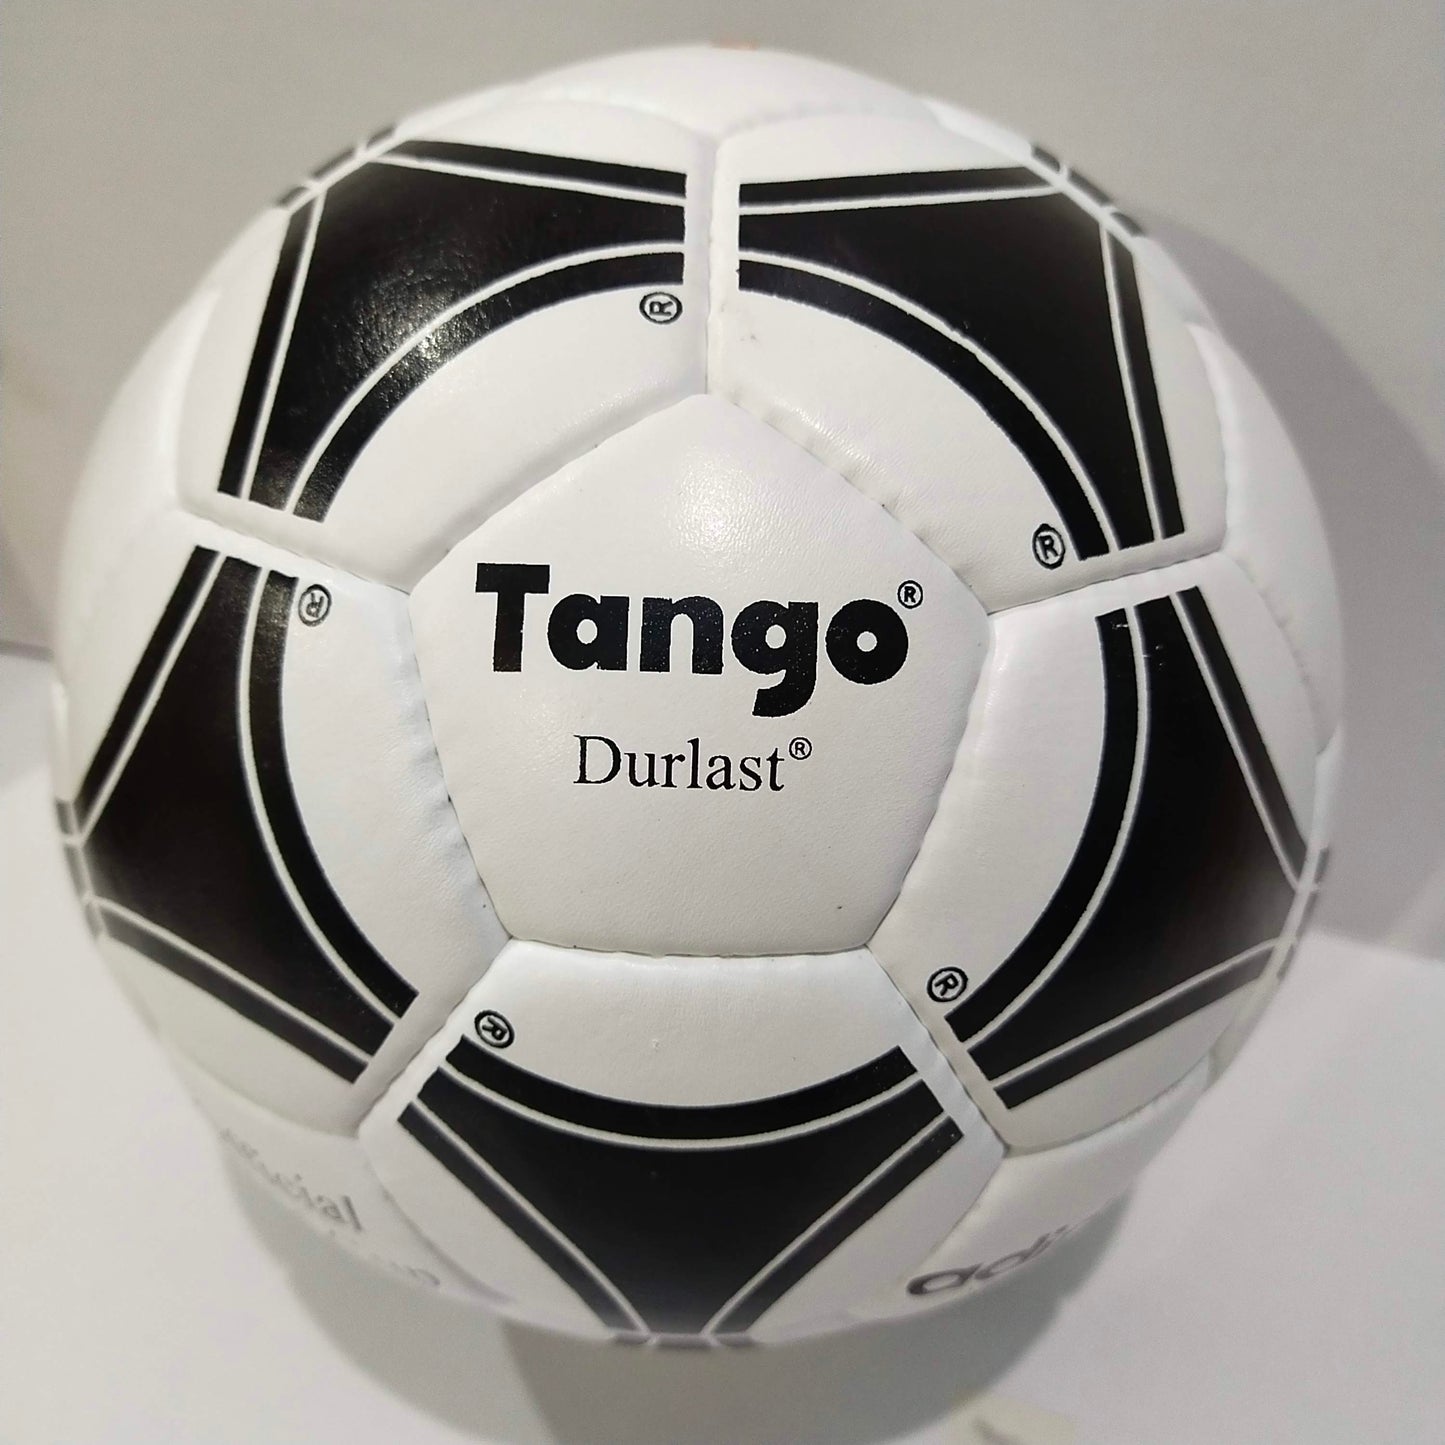 Adidas Tango Durlast | 1978 FIFA World Cup Ball | Genuine Leather SIZE 5 01